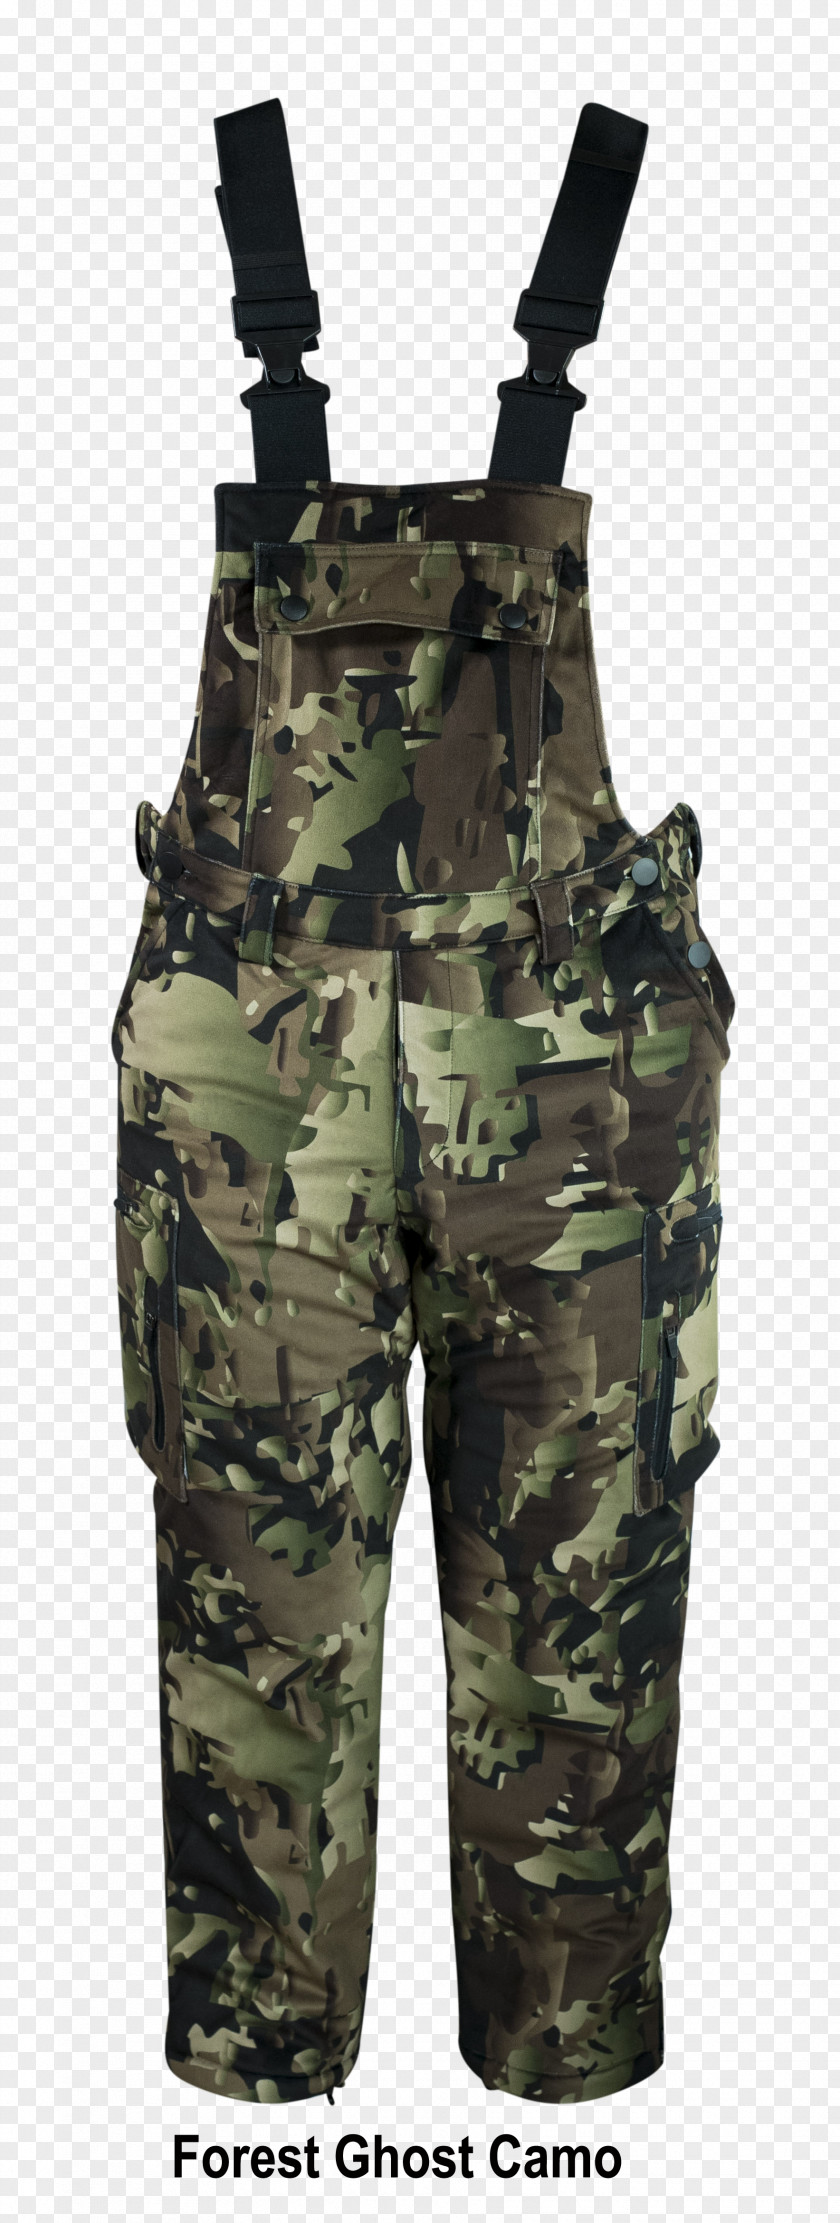 Military Uniform Camouflage Pocket Pants PNG